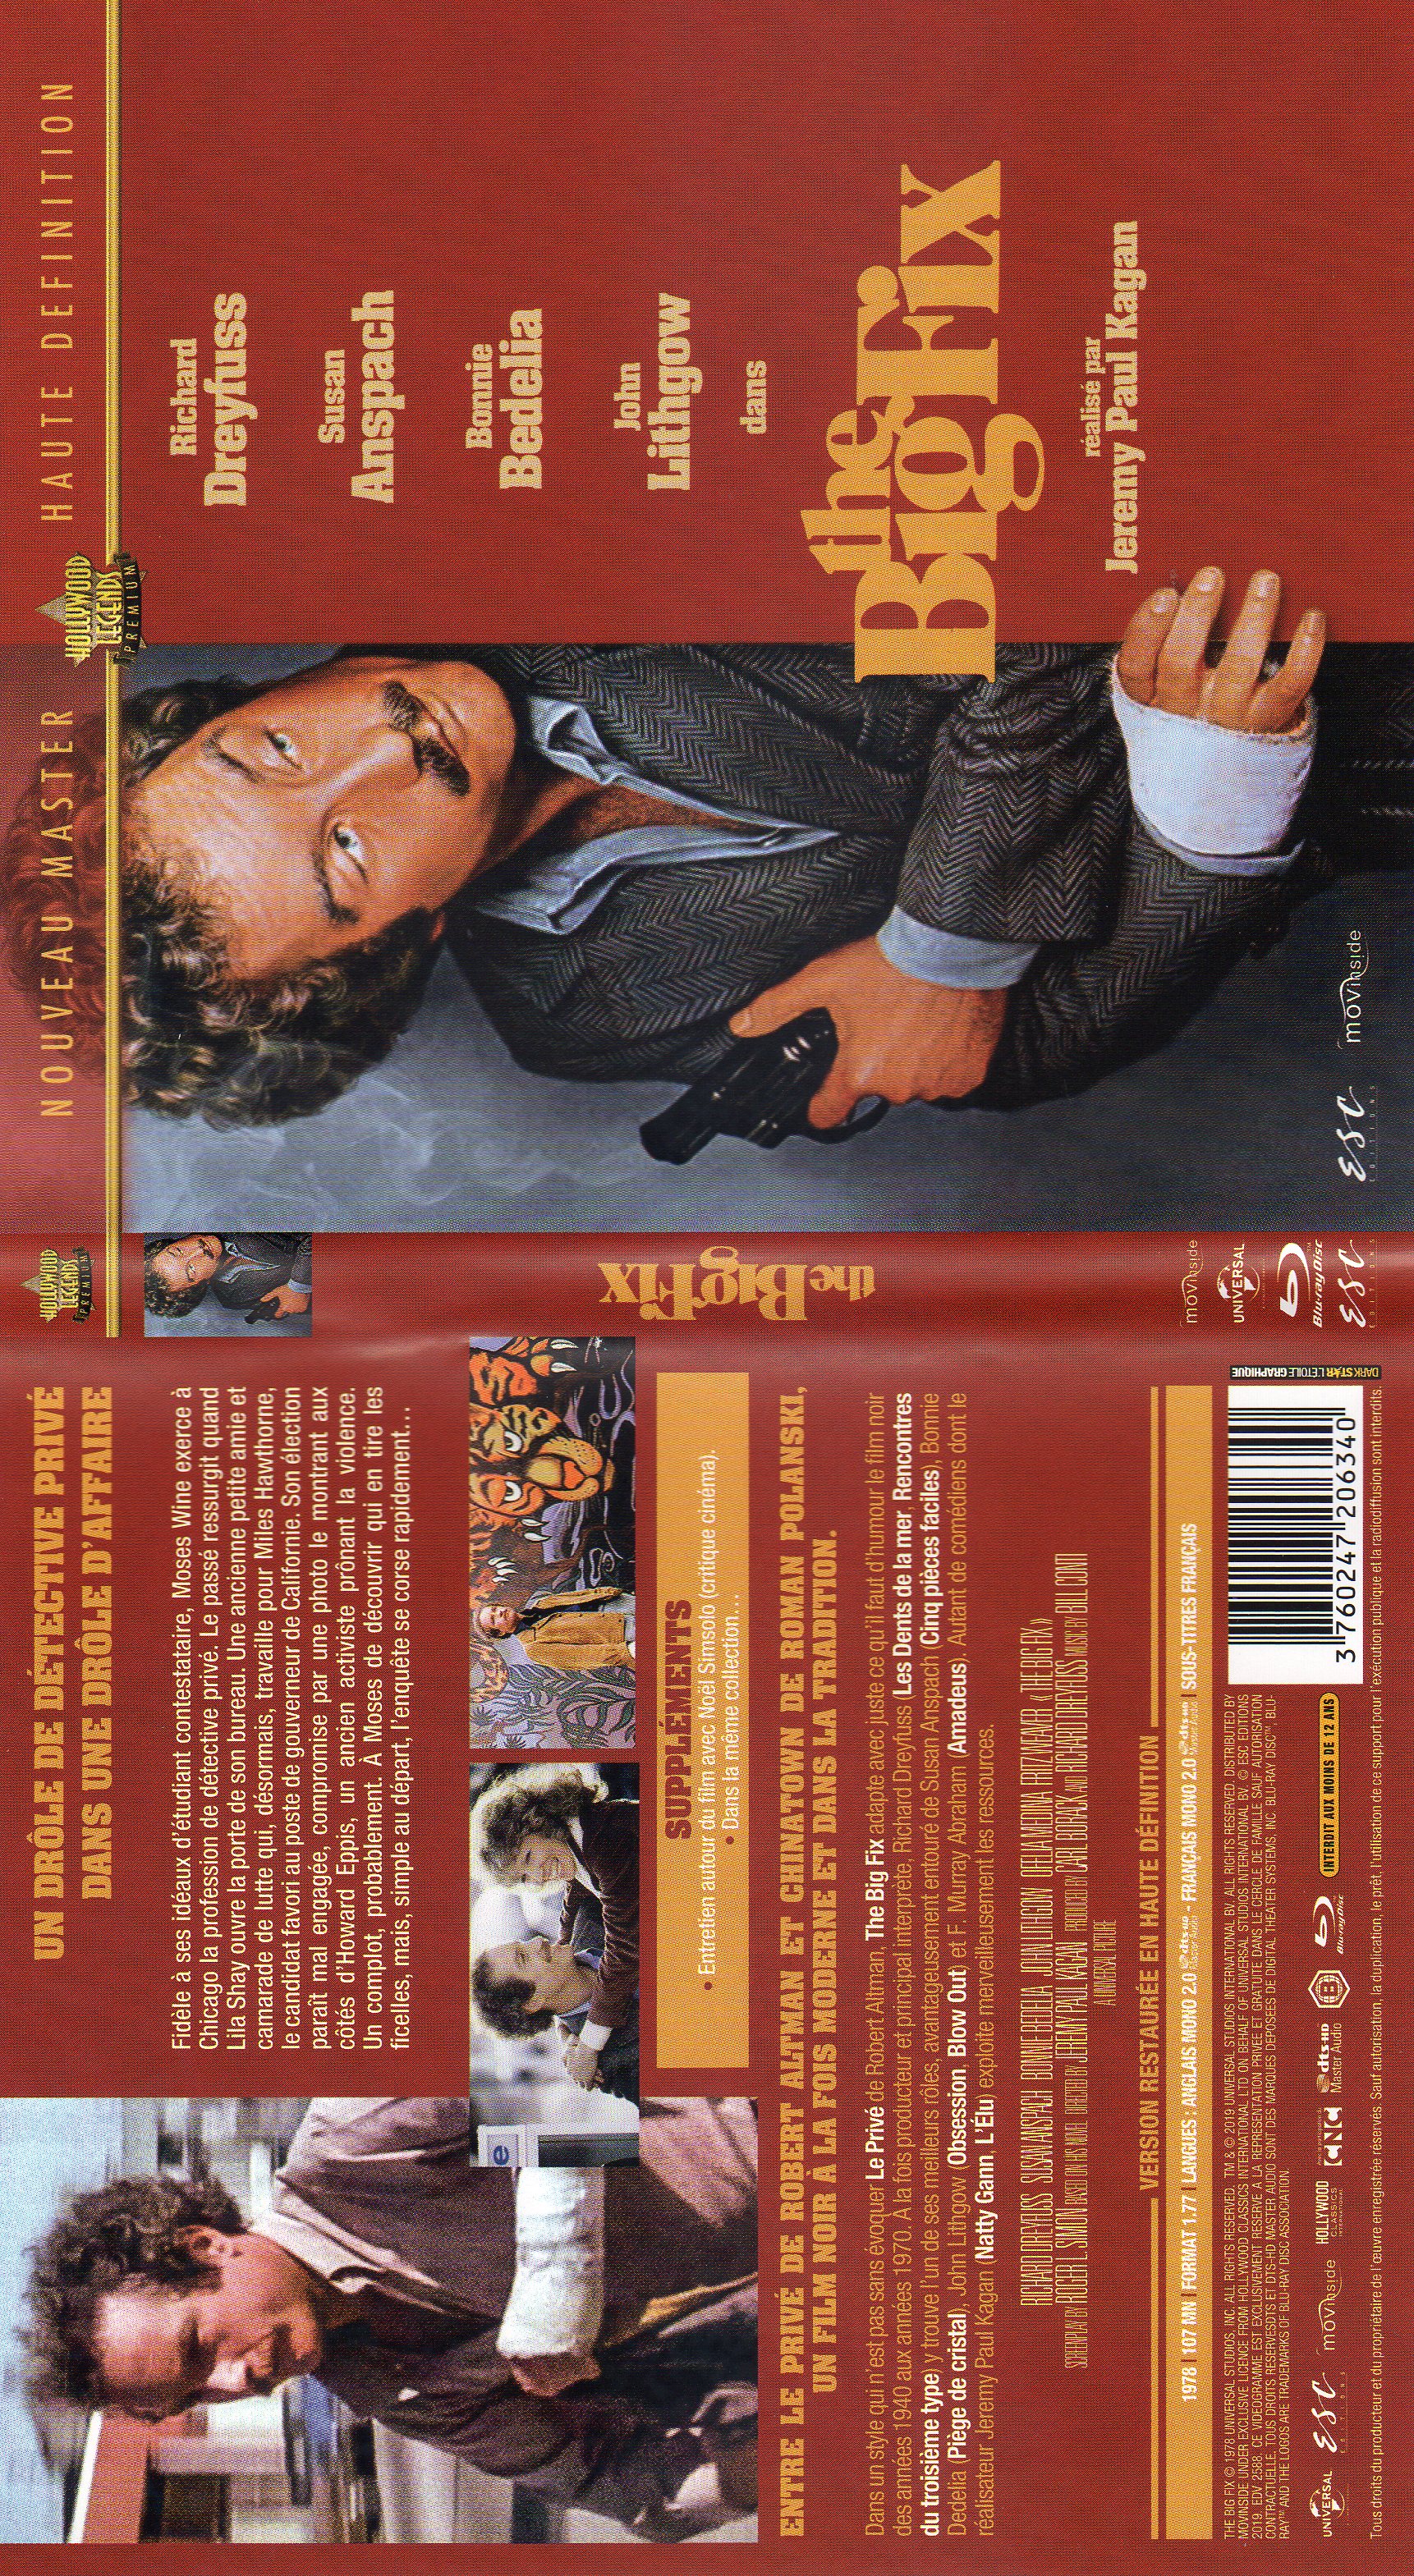 Jaquette DVD The Big Fix (BLU-RAY)